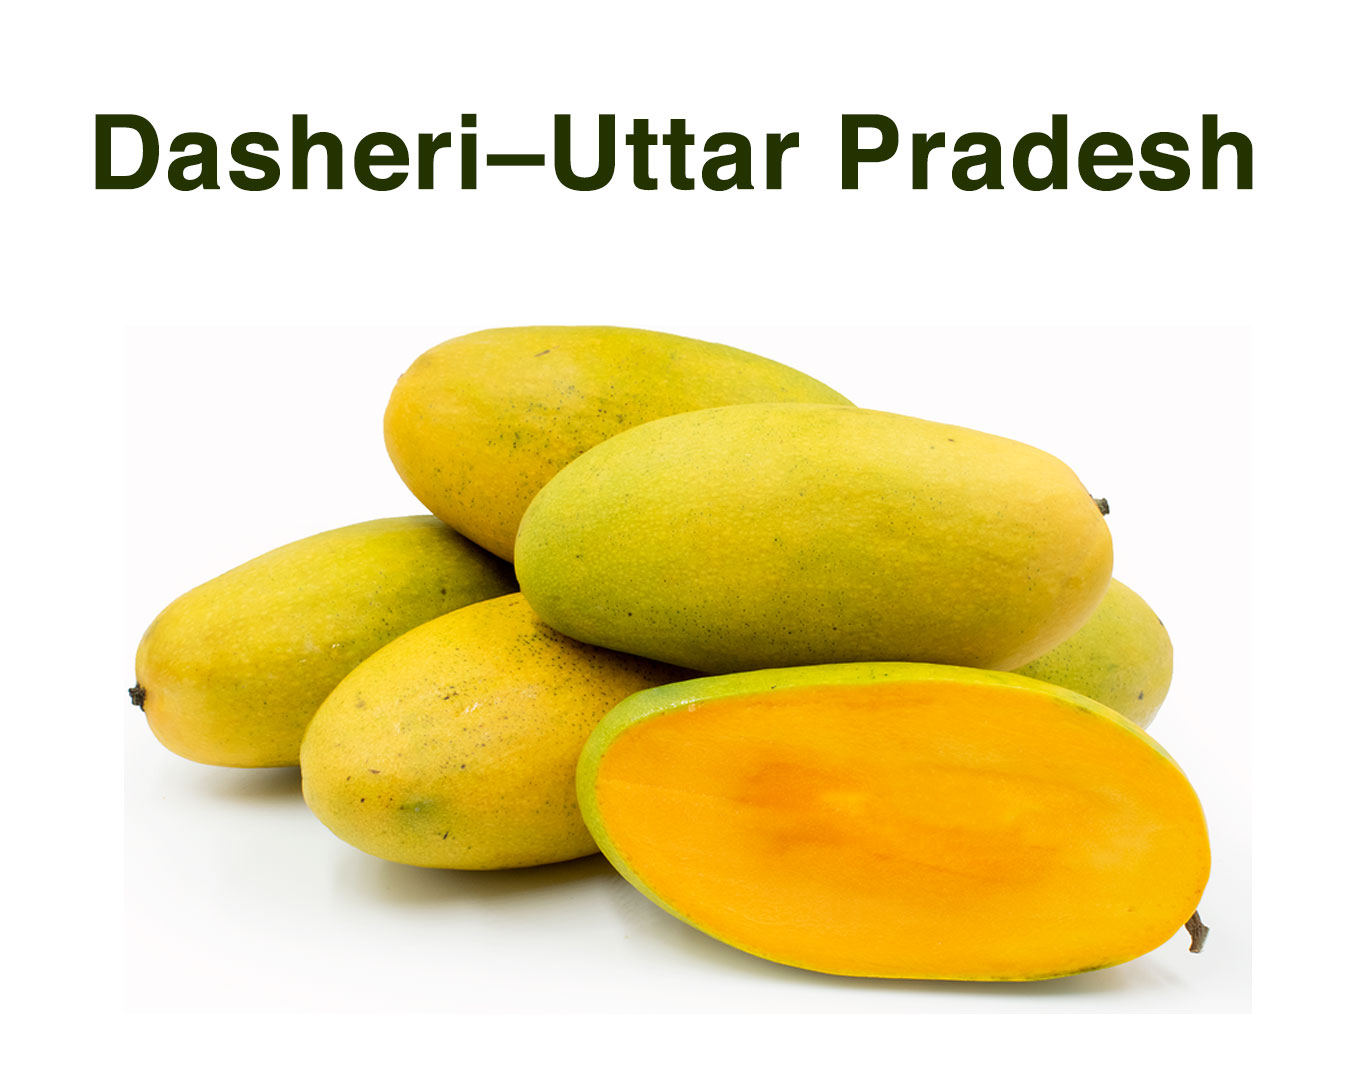 varieties of mangoes - Dasheri – Uttar Pradesh